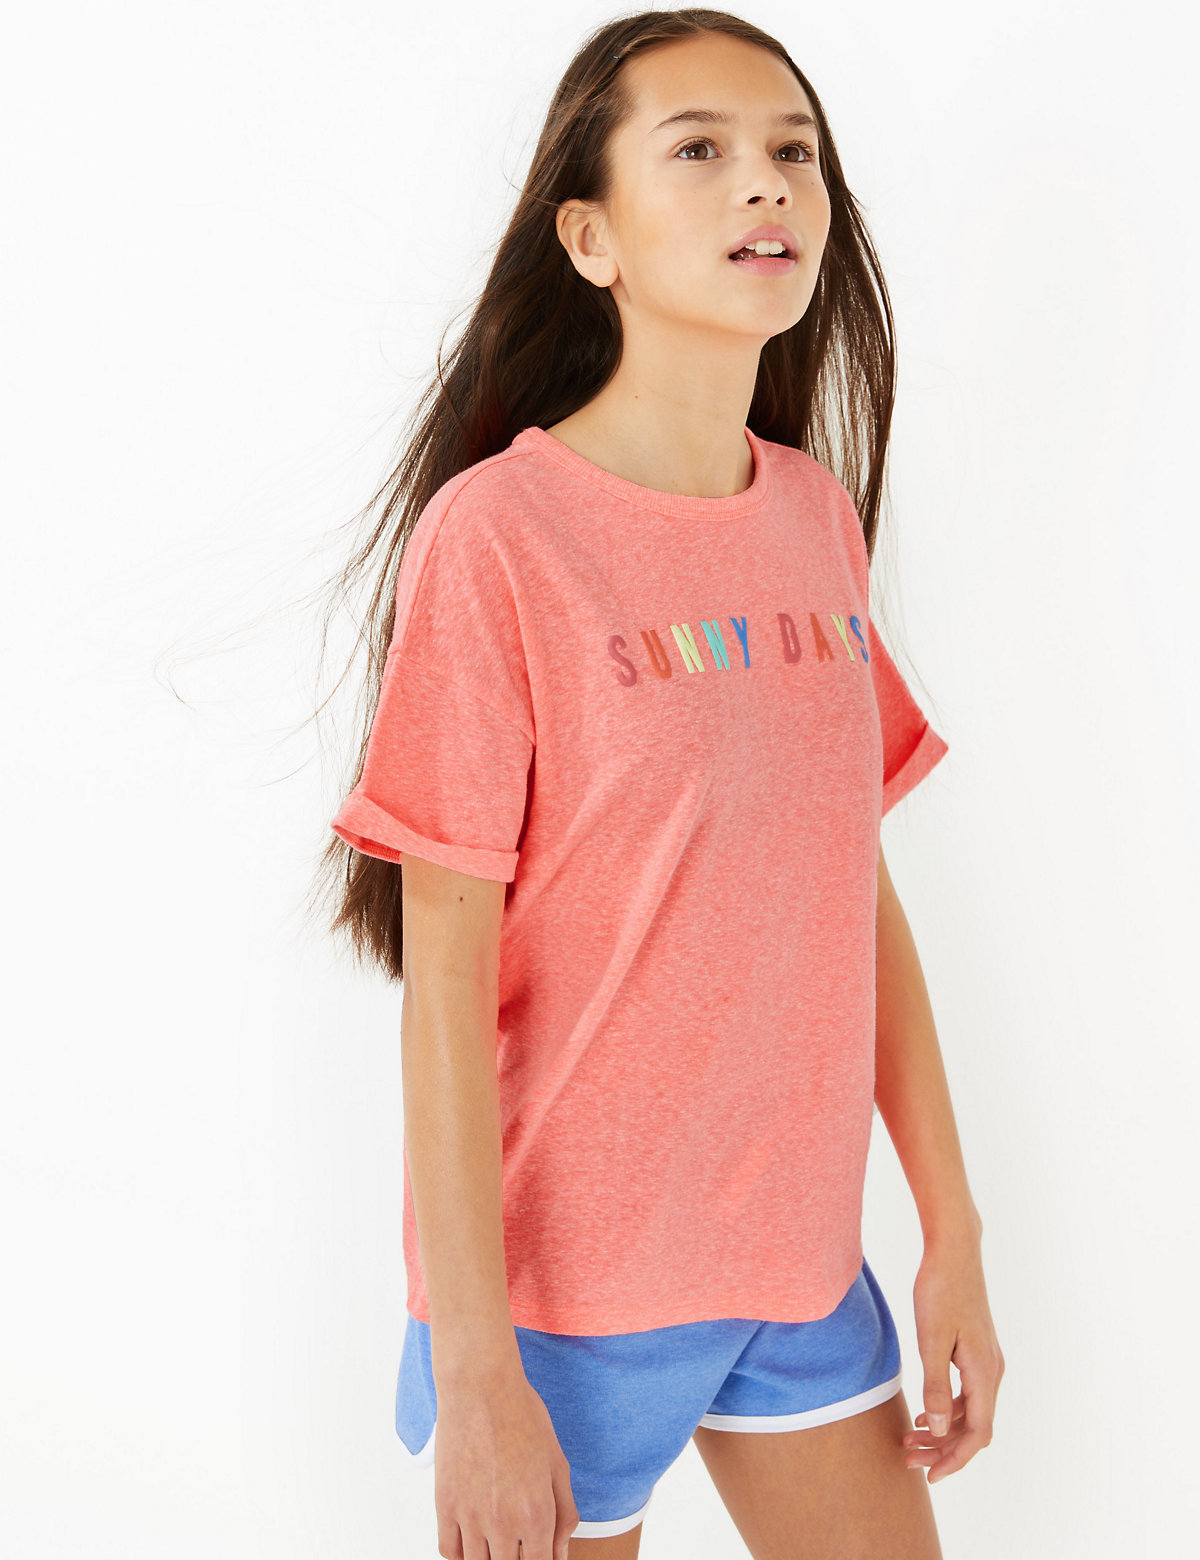 Rainbow Sunny Days Graphic T-Shirt (6-16 Yrs)